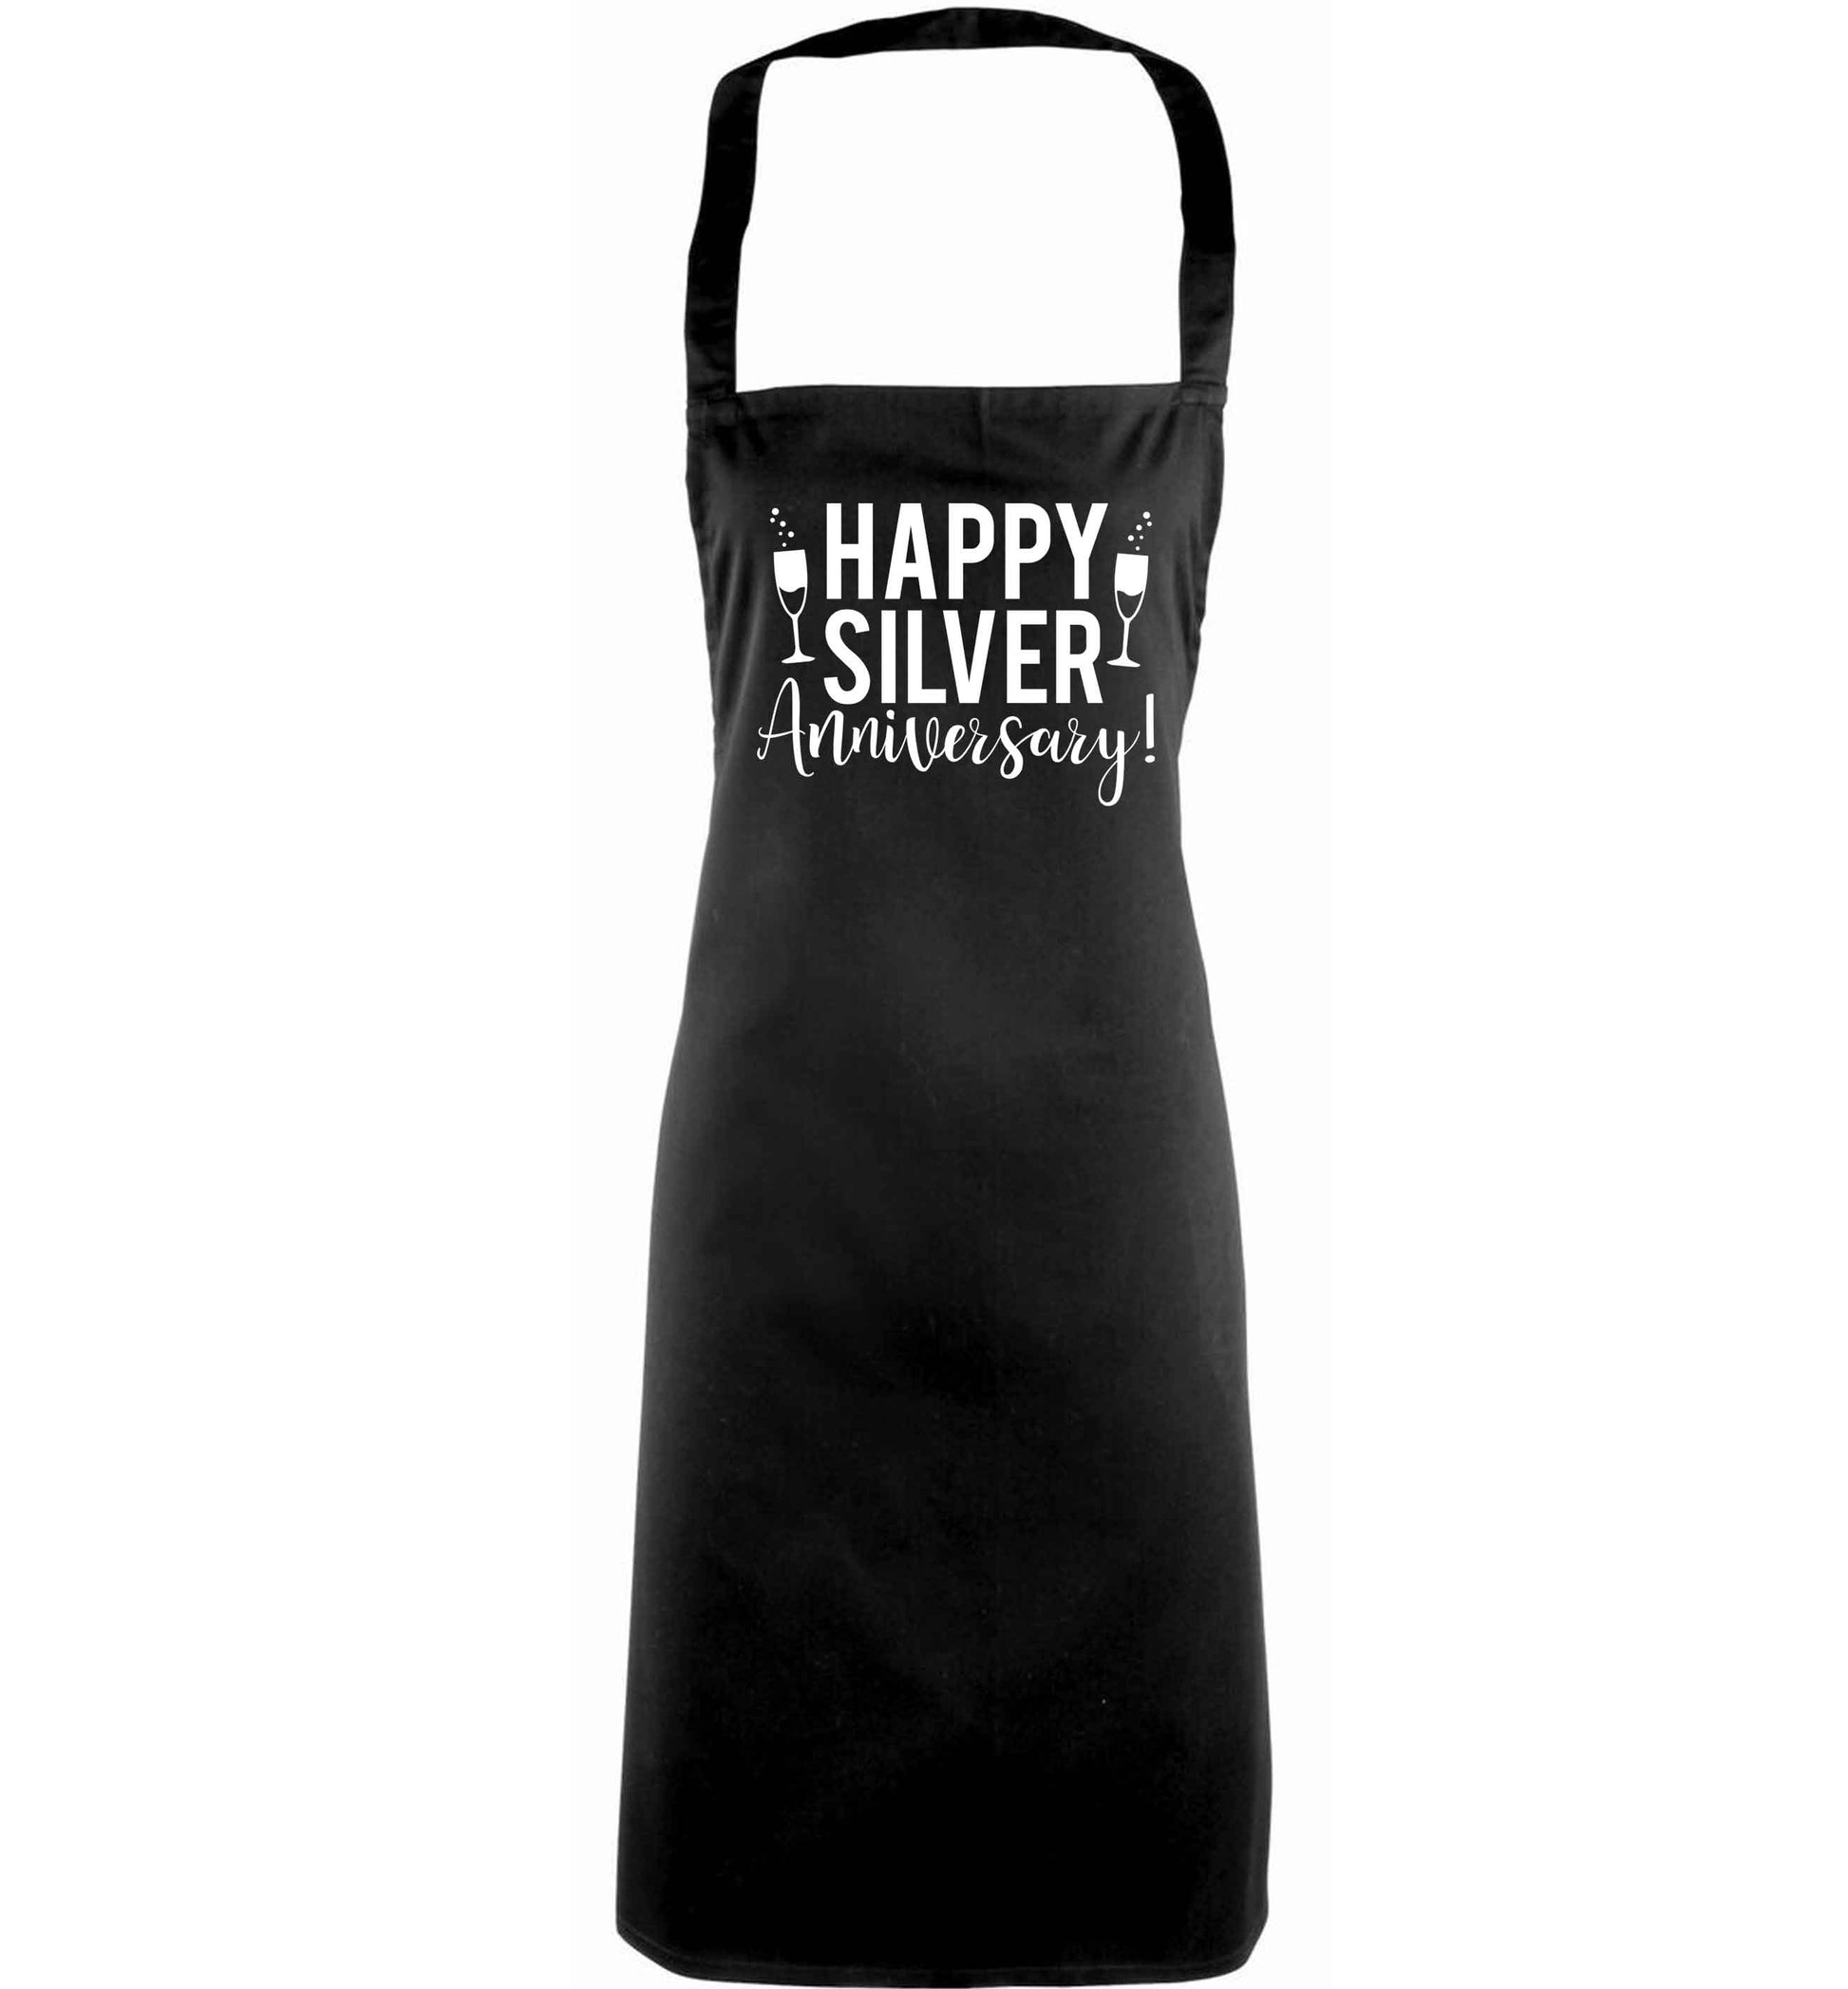 Happy silver anniversary! adults black apron